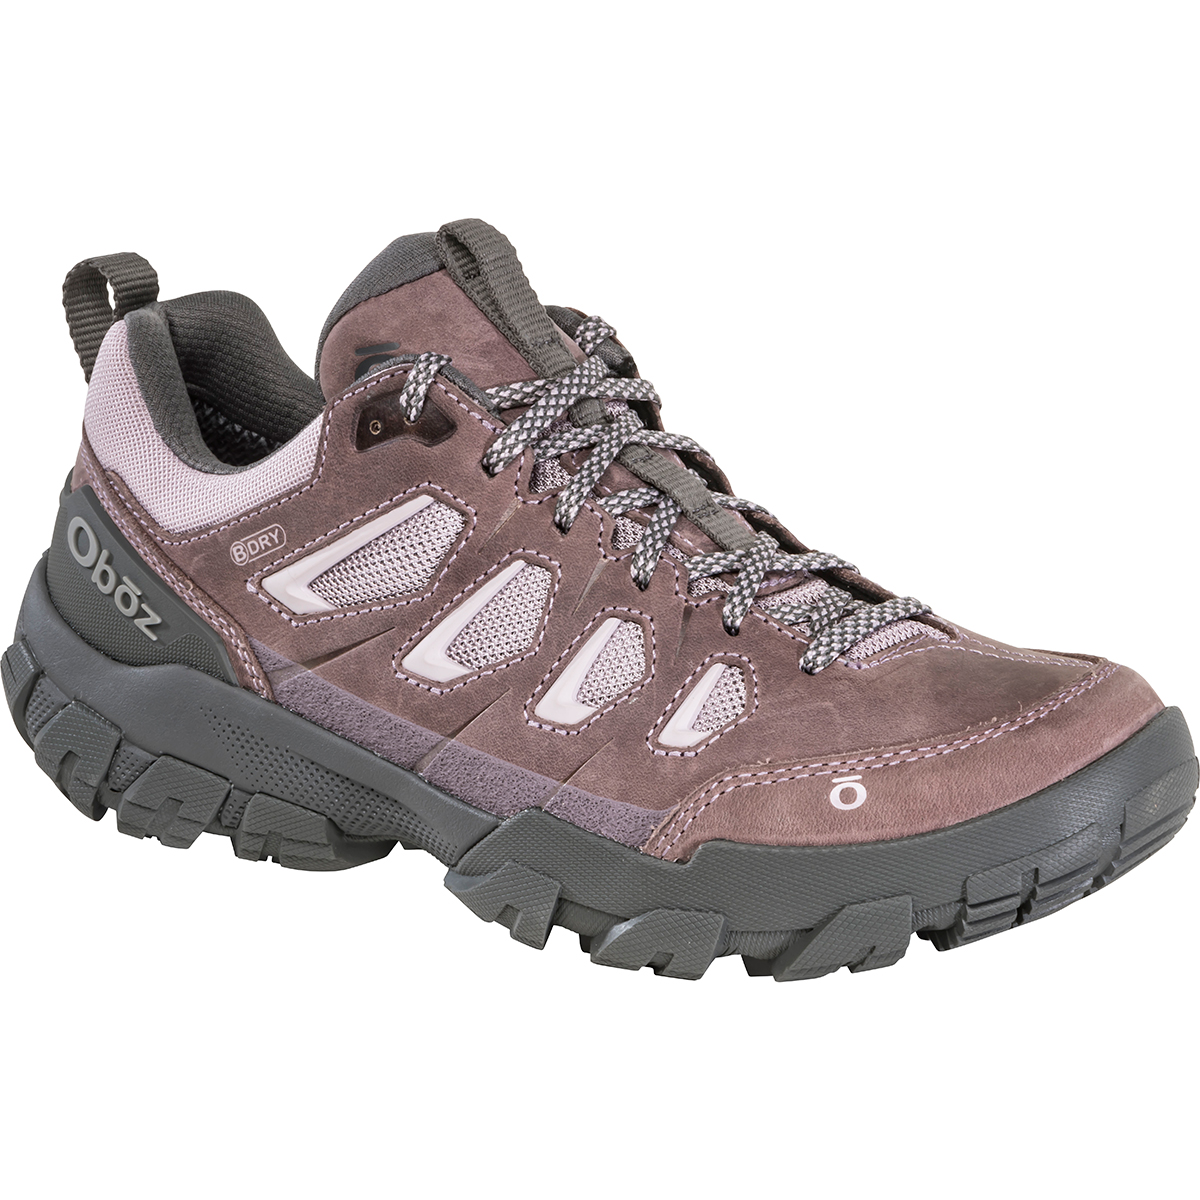 Oboz Women's Sawtooth X Low Waterproof Hiking Shoes - Size 10